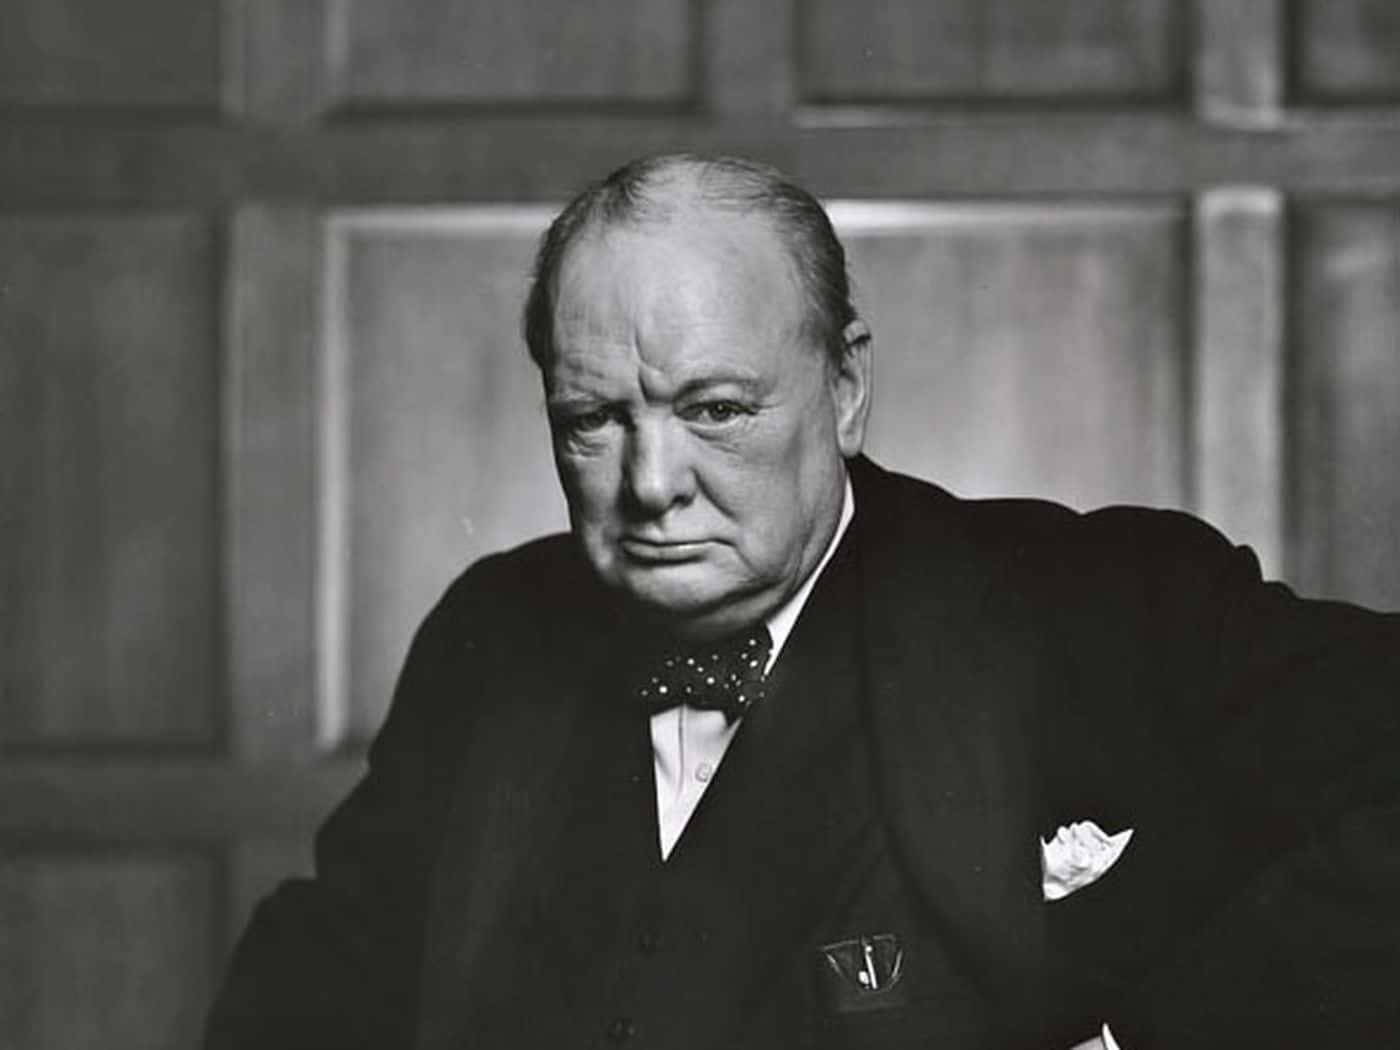 Winston Churchill: British statesman, war leader, and Prime Minister